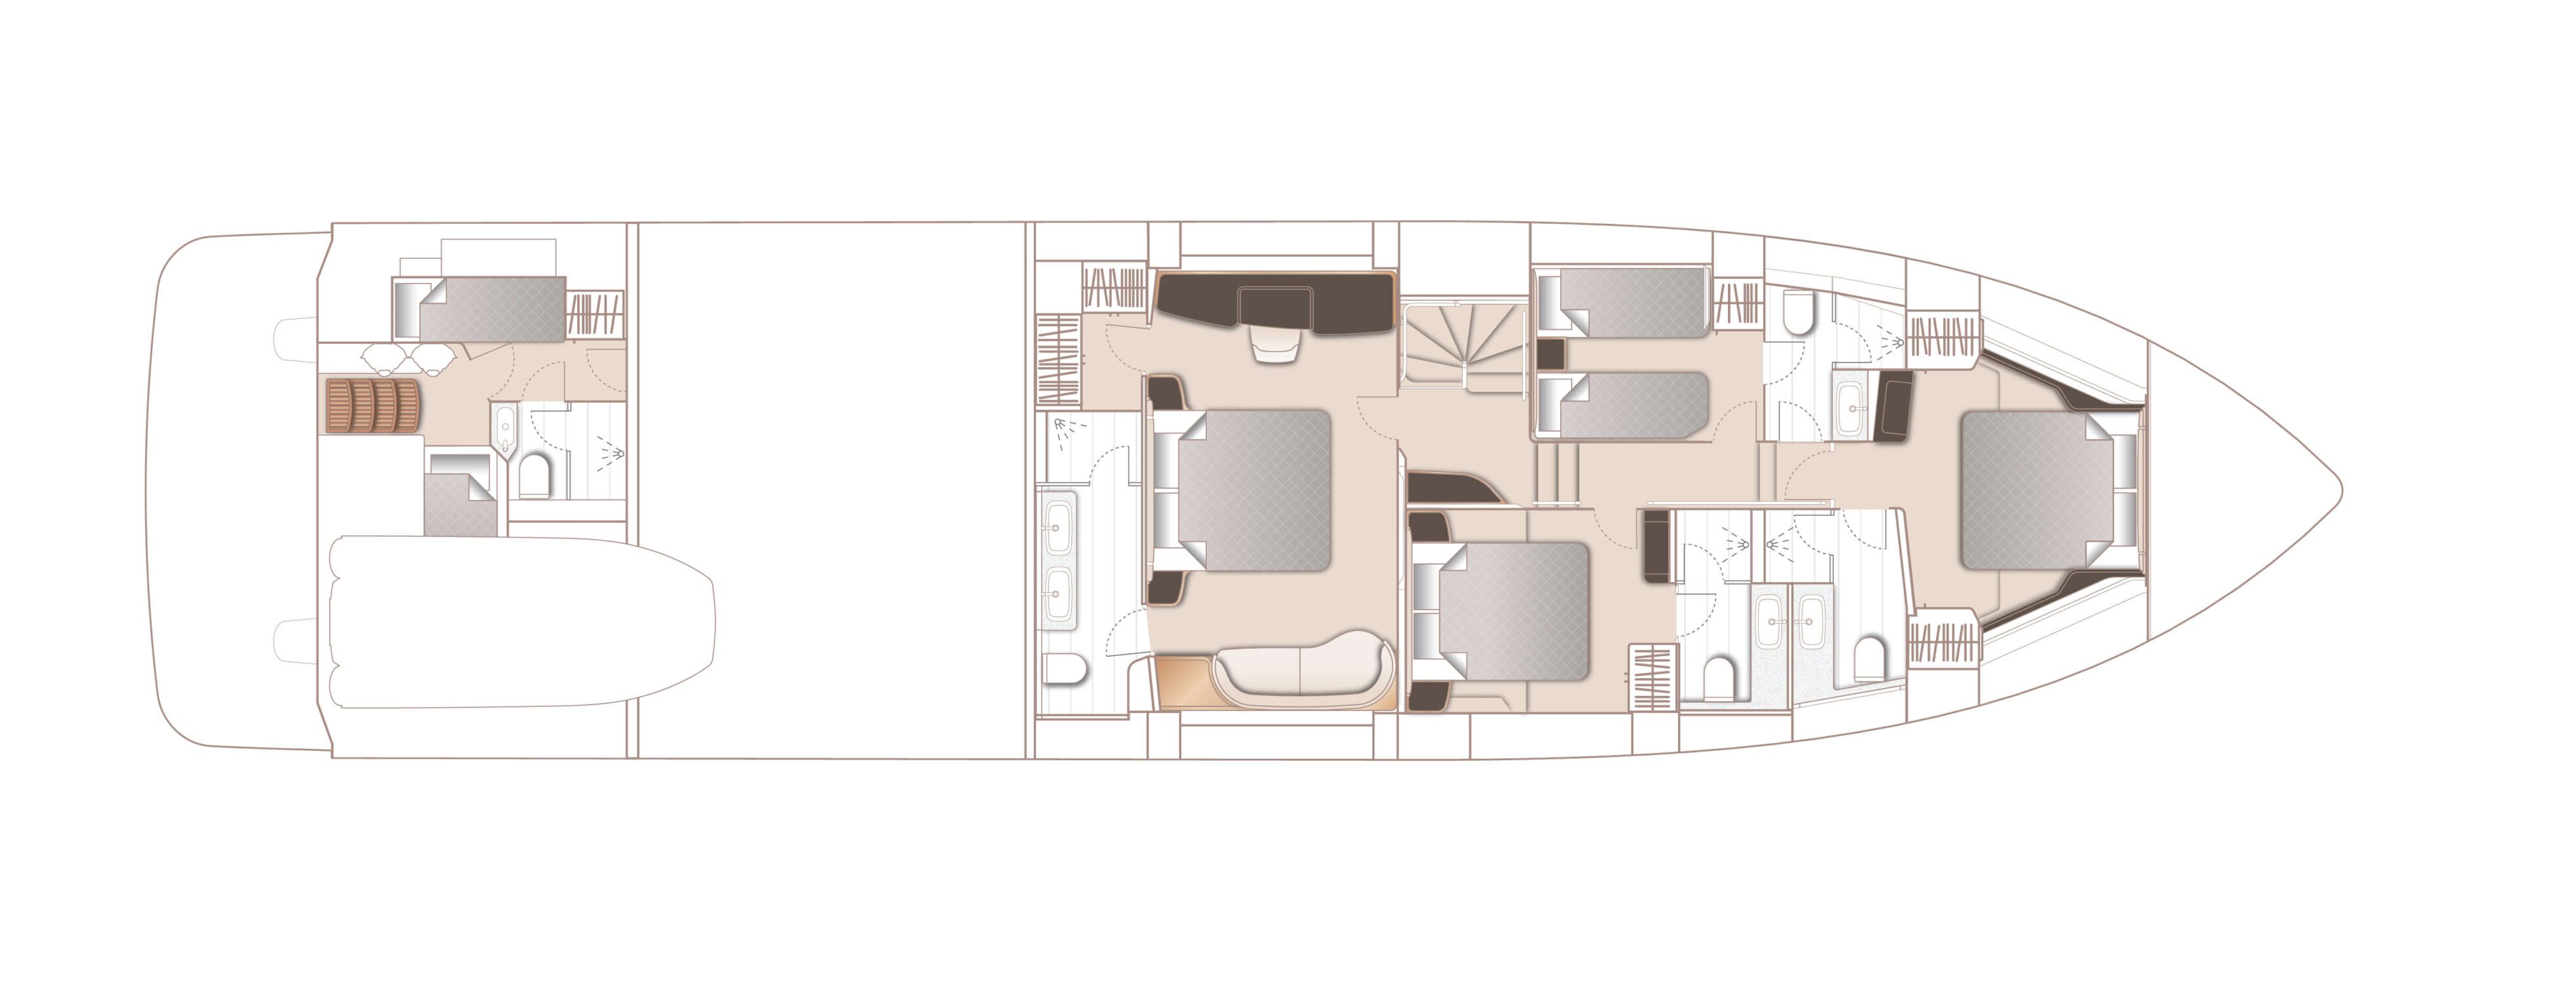 Princess S80 lower deck layout